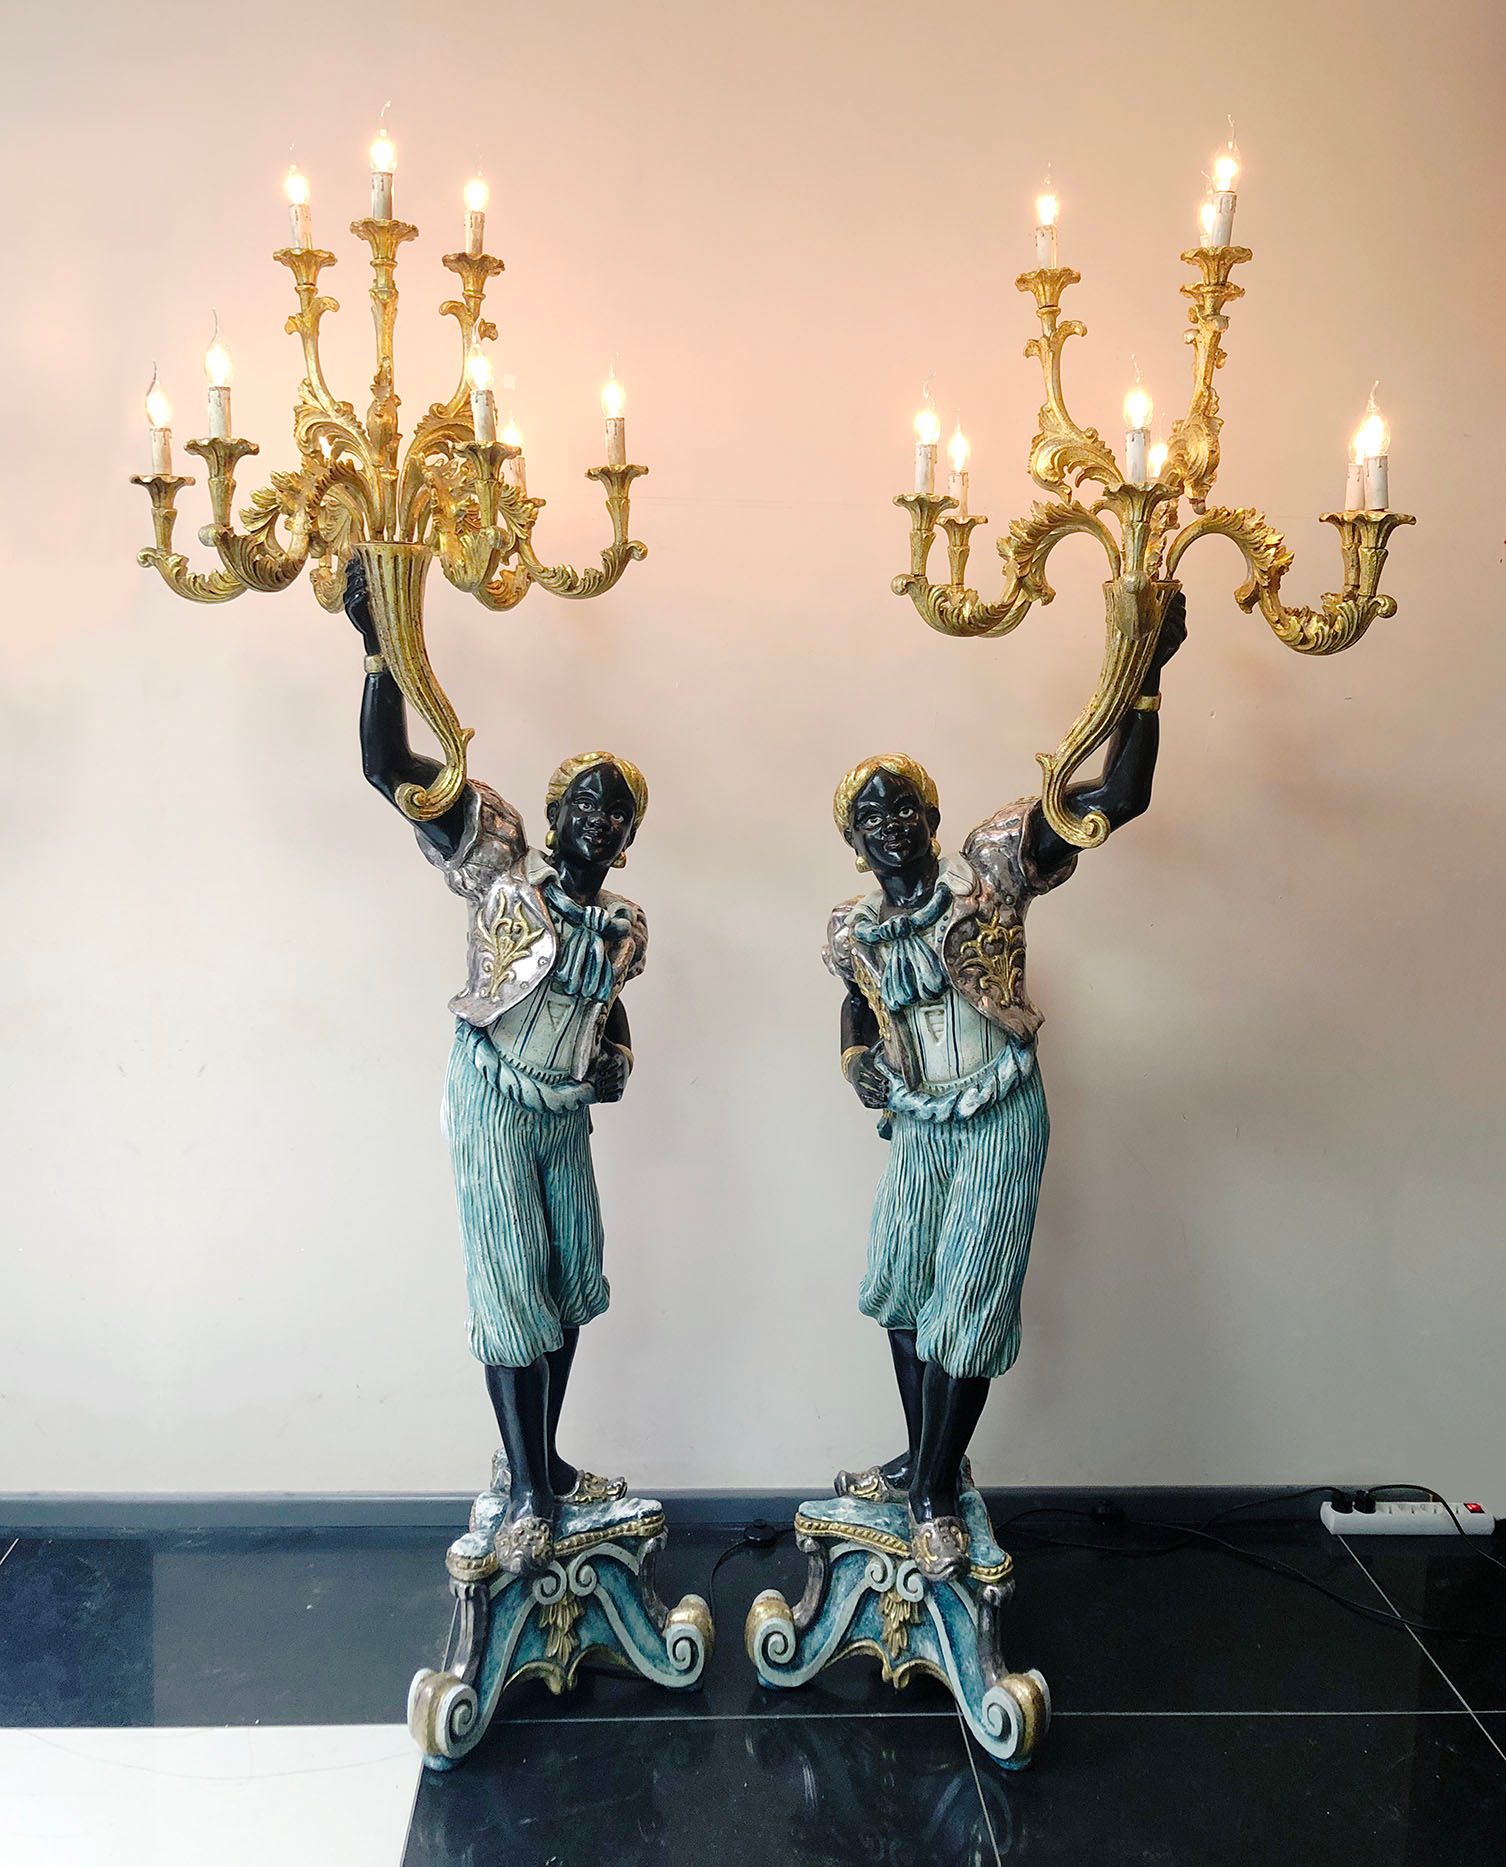 Set of 2 Wooden Black Servant Statues - Floor Lamps 一套2个黑色木制仆人雕像--落地灯。这些雕像具有复杂的细&hellip;